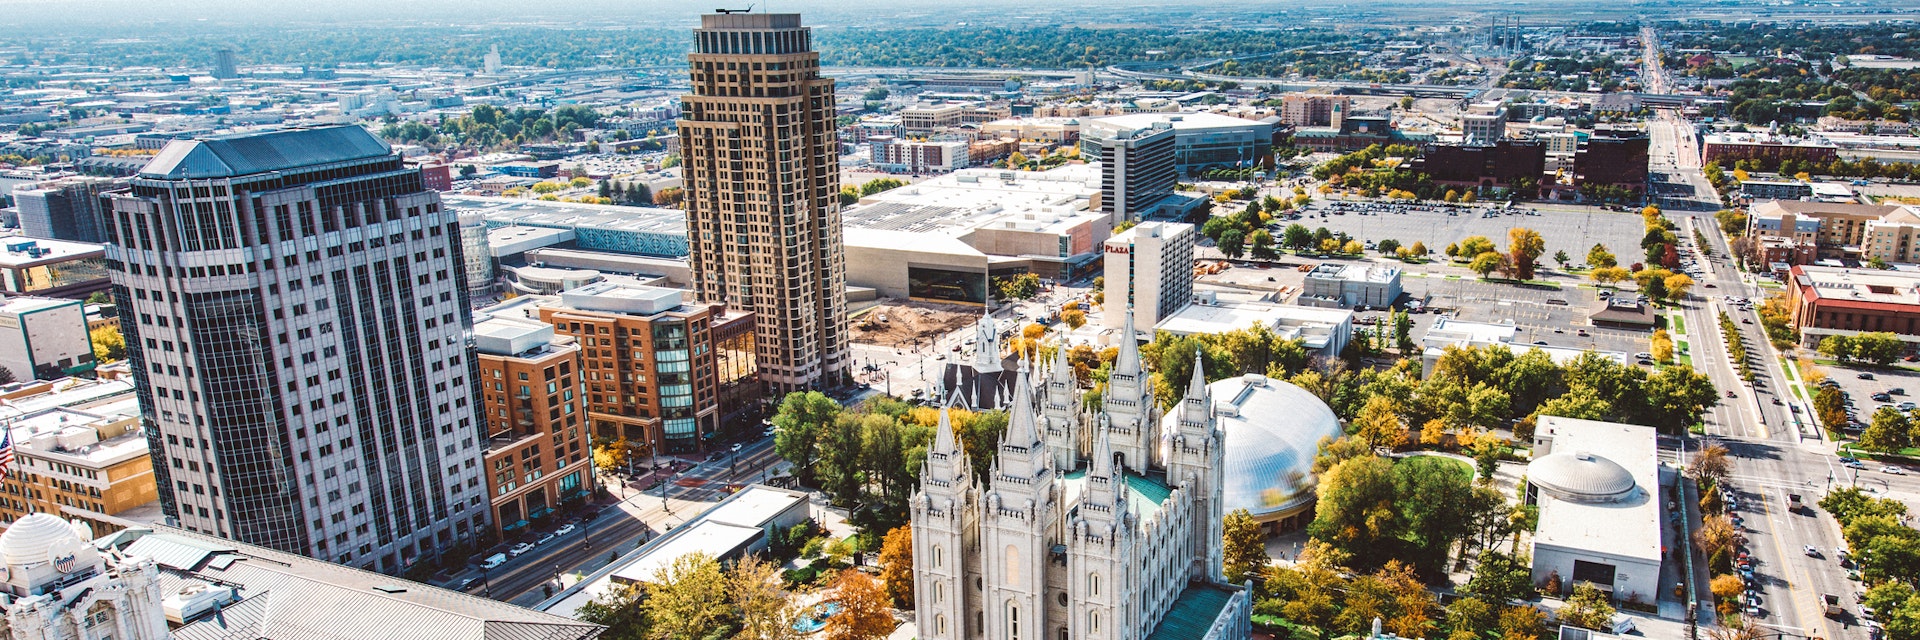 Temple Square dominates the downtown neighborhood of Salt Lake City